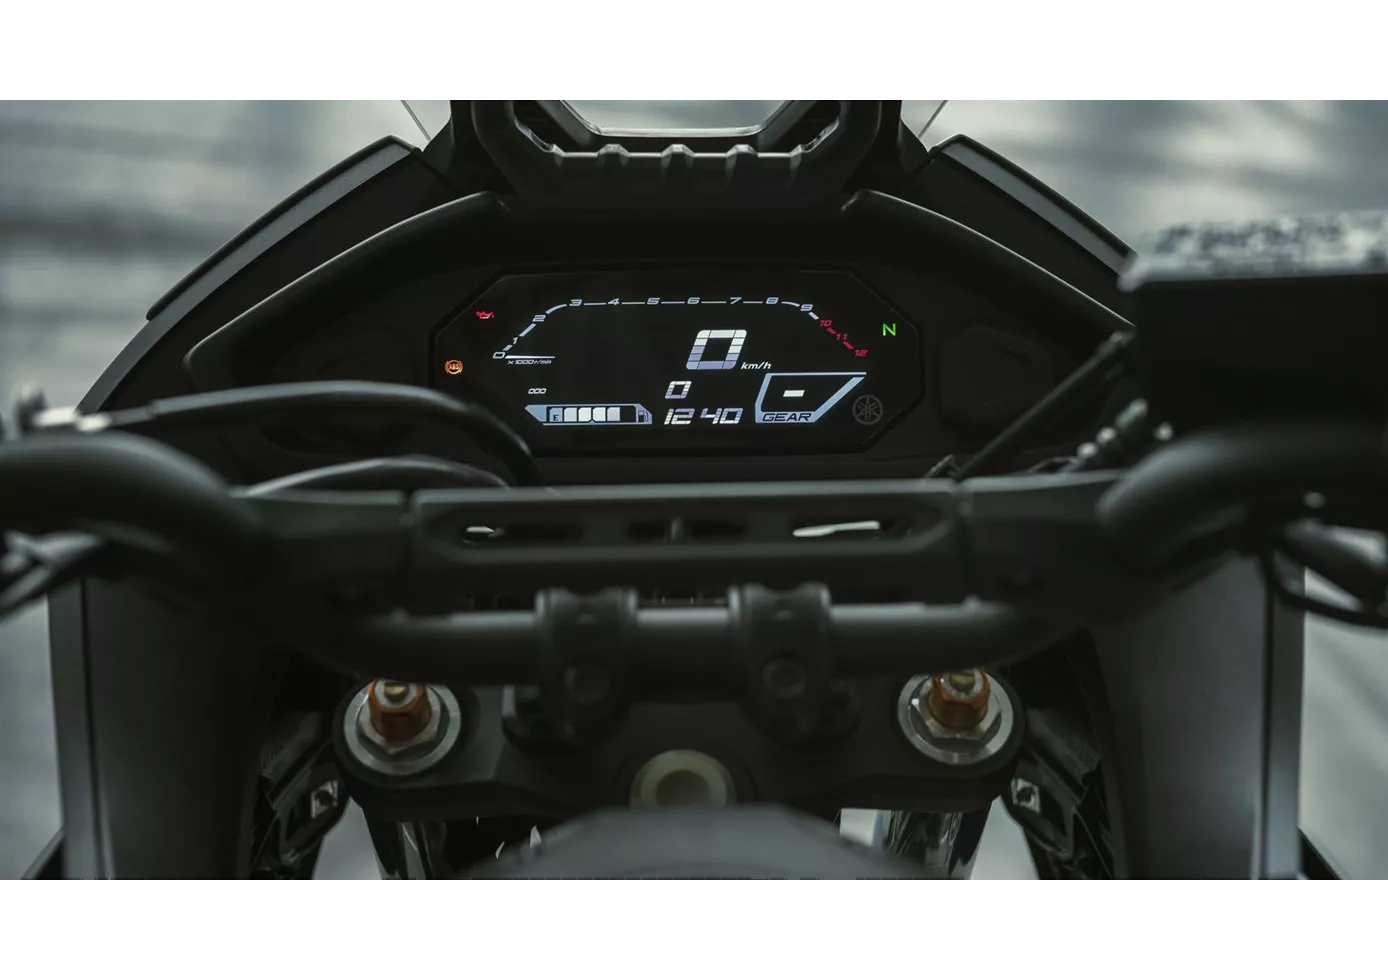 Yamaha Tracer 700 2020